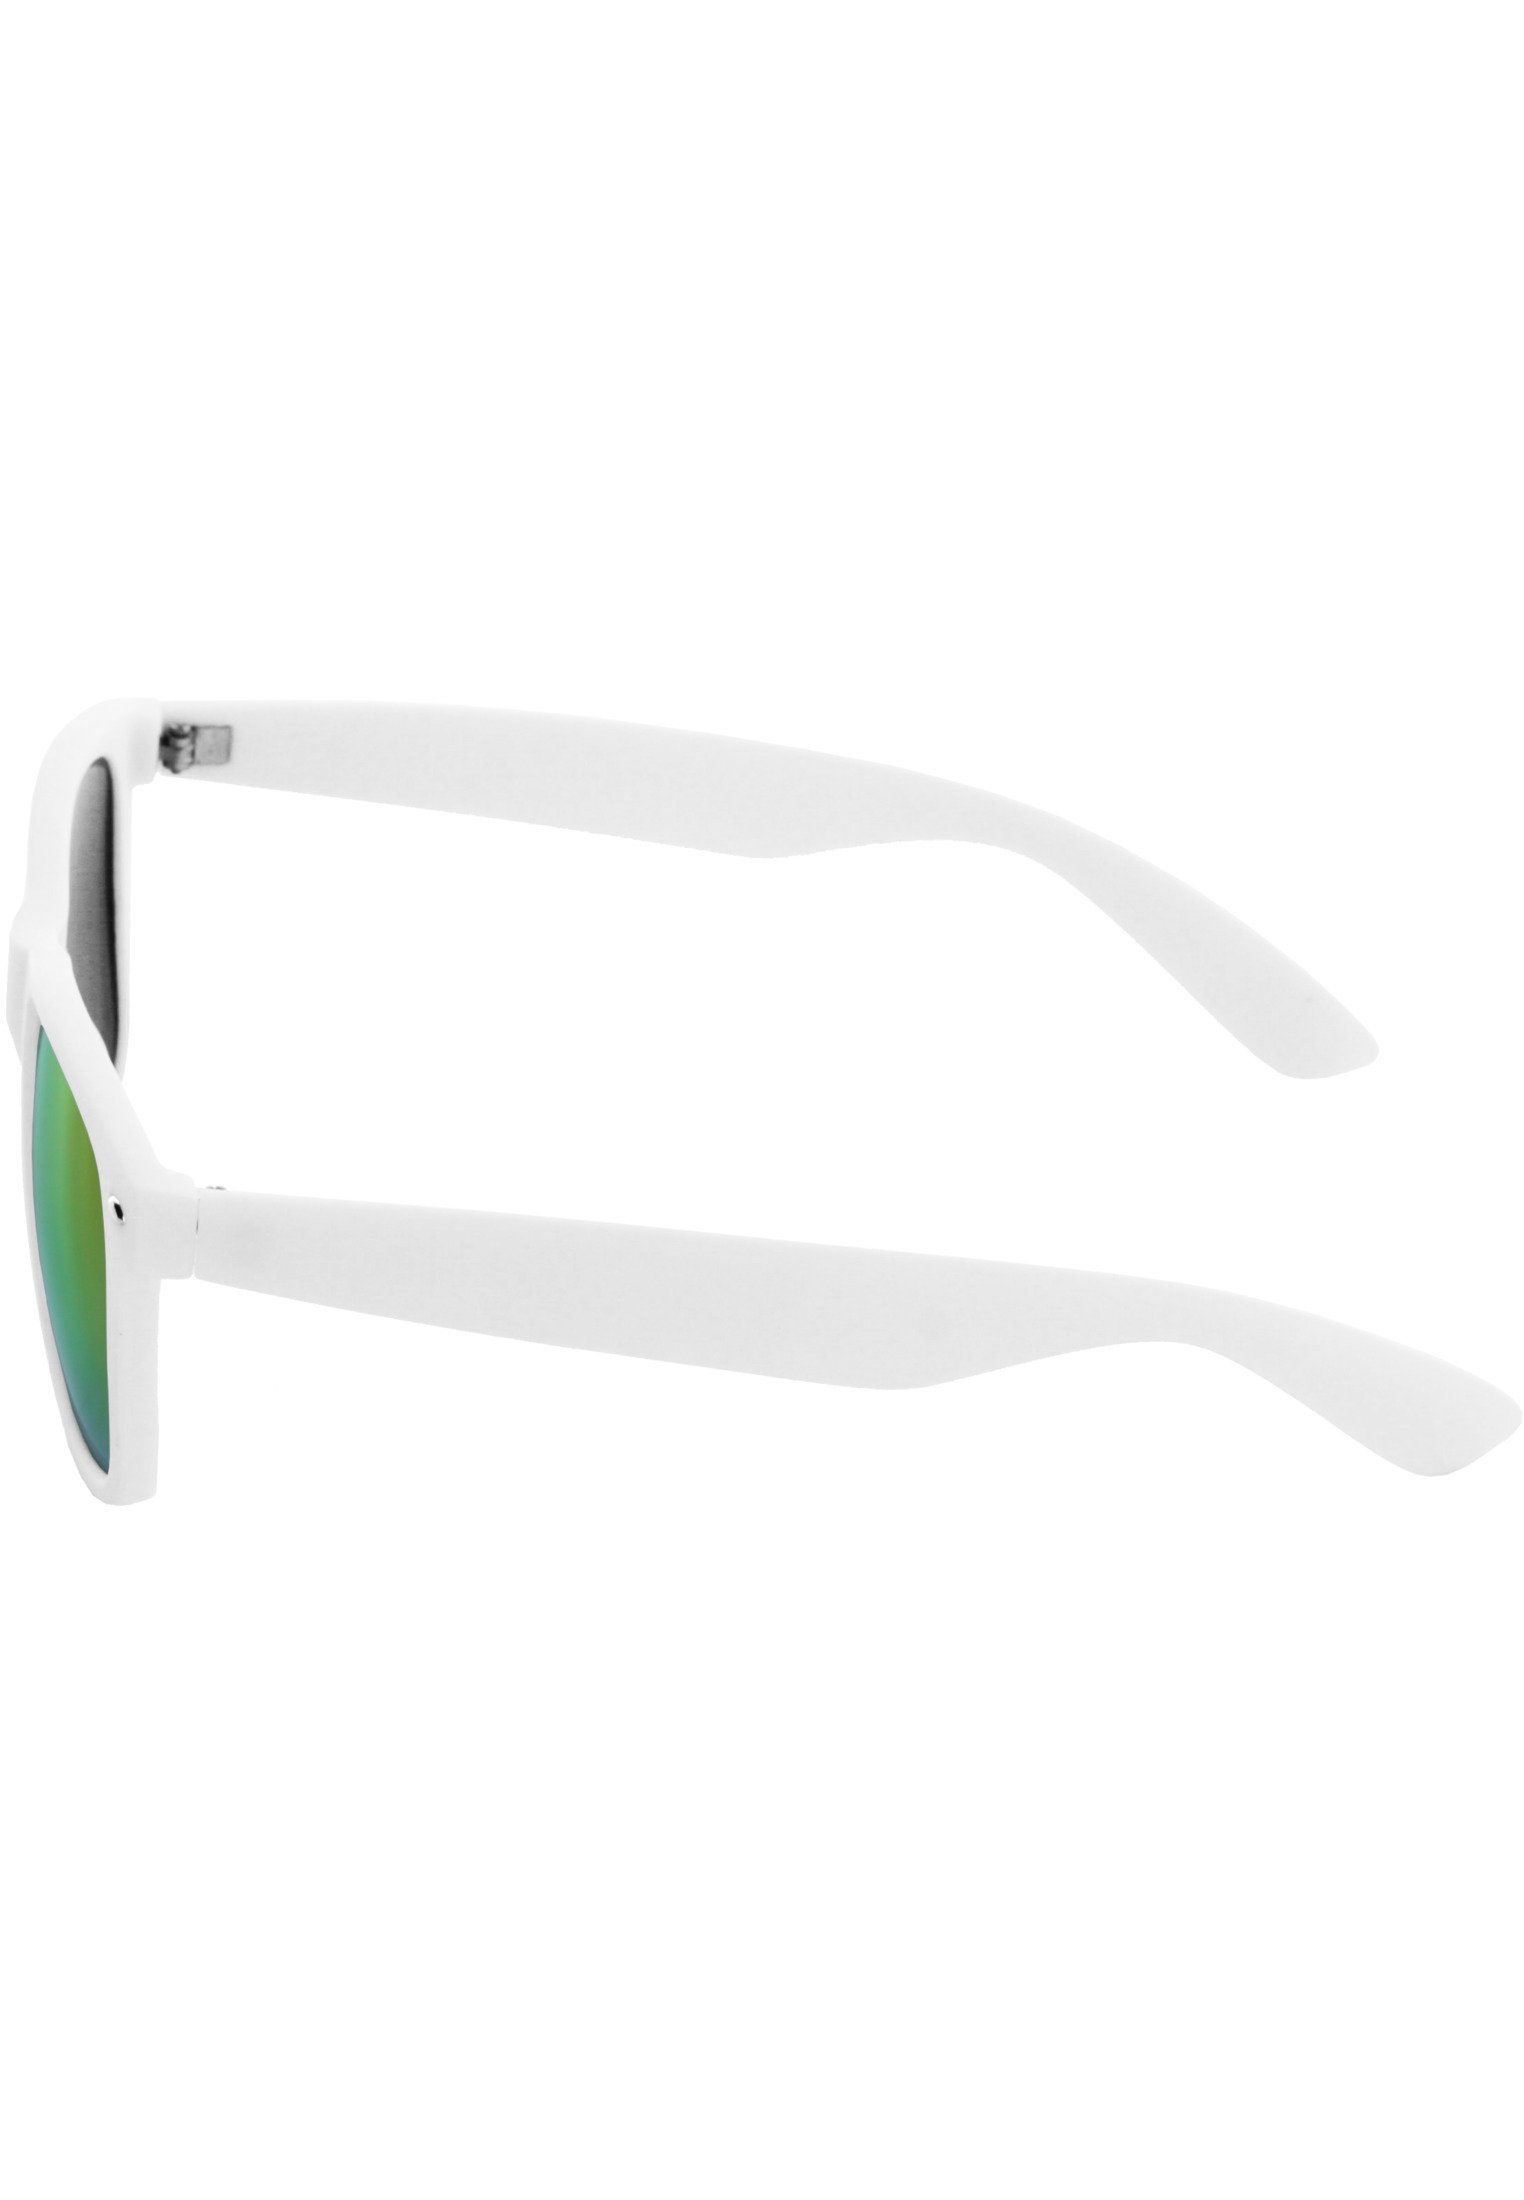 MSTRDS Sonnenbrille Accessoires wht/grn Sunglasses Mirror Likoma